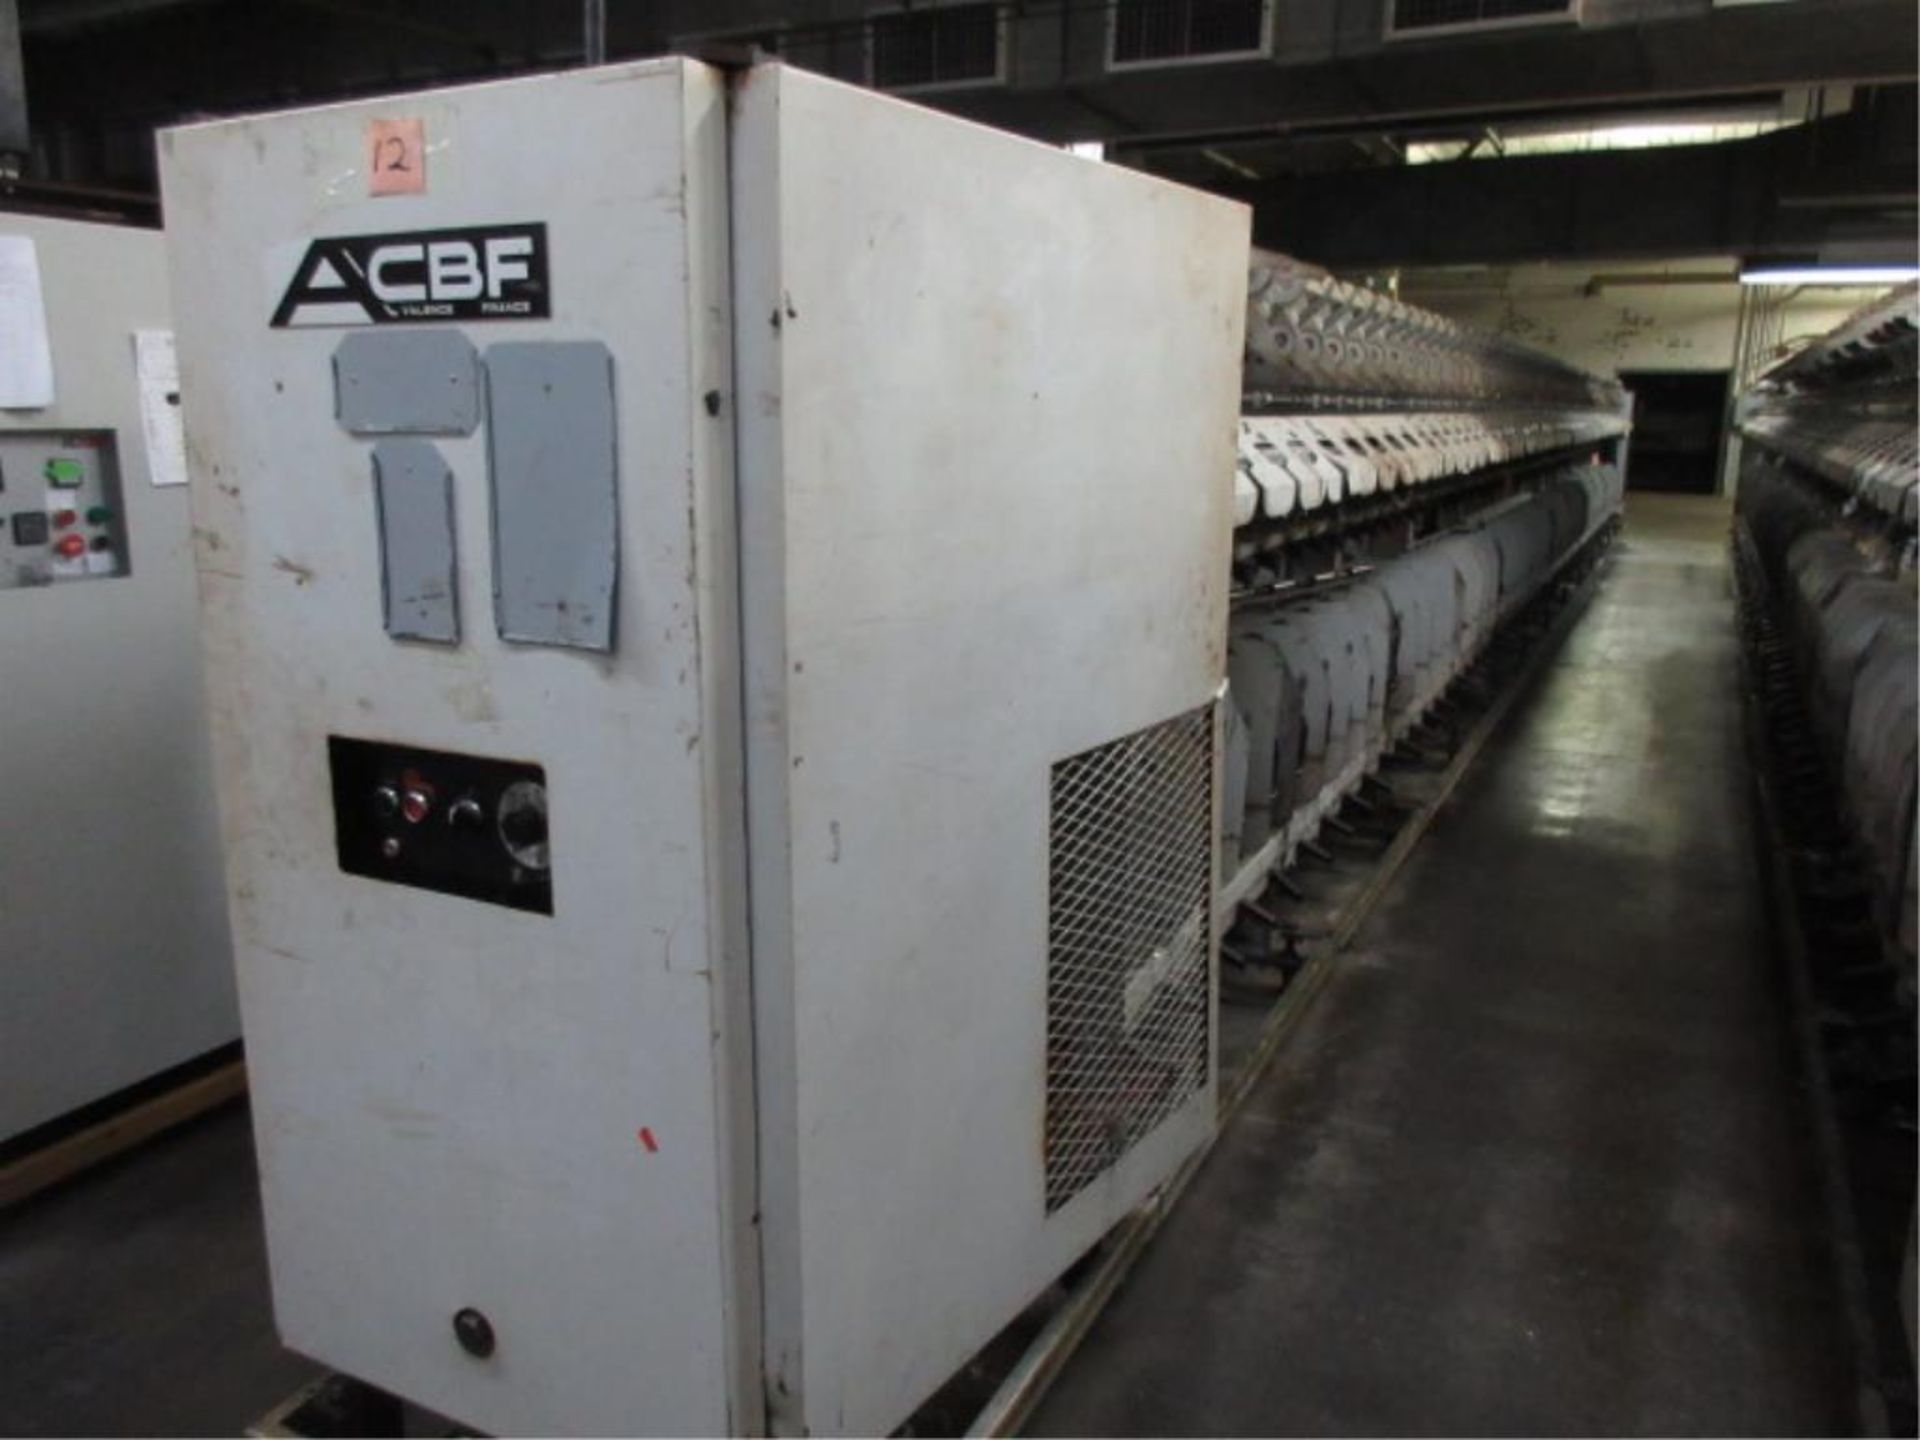 ACBF 3055 BI 2X1 Twisting Machine, (1983), 120 spindles, parts machine, please inspect. SN# T410-